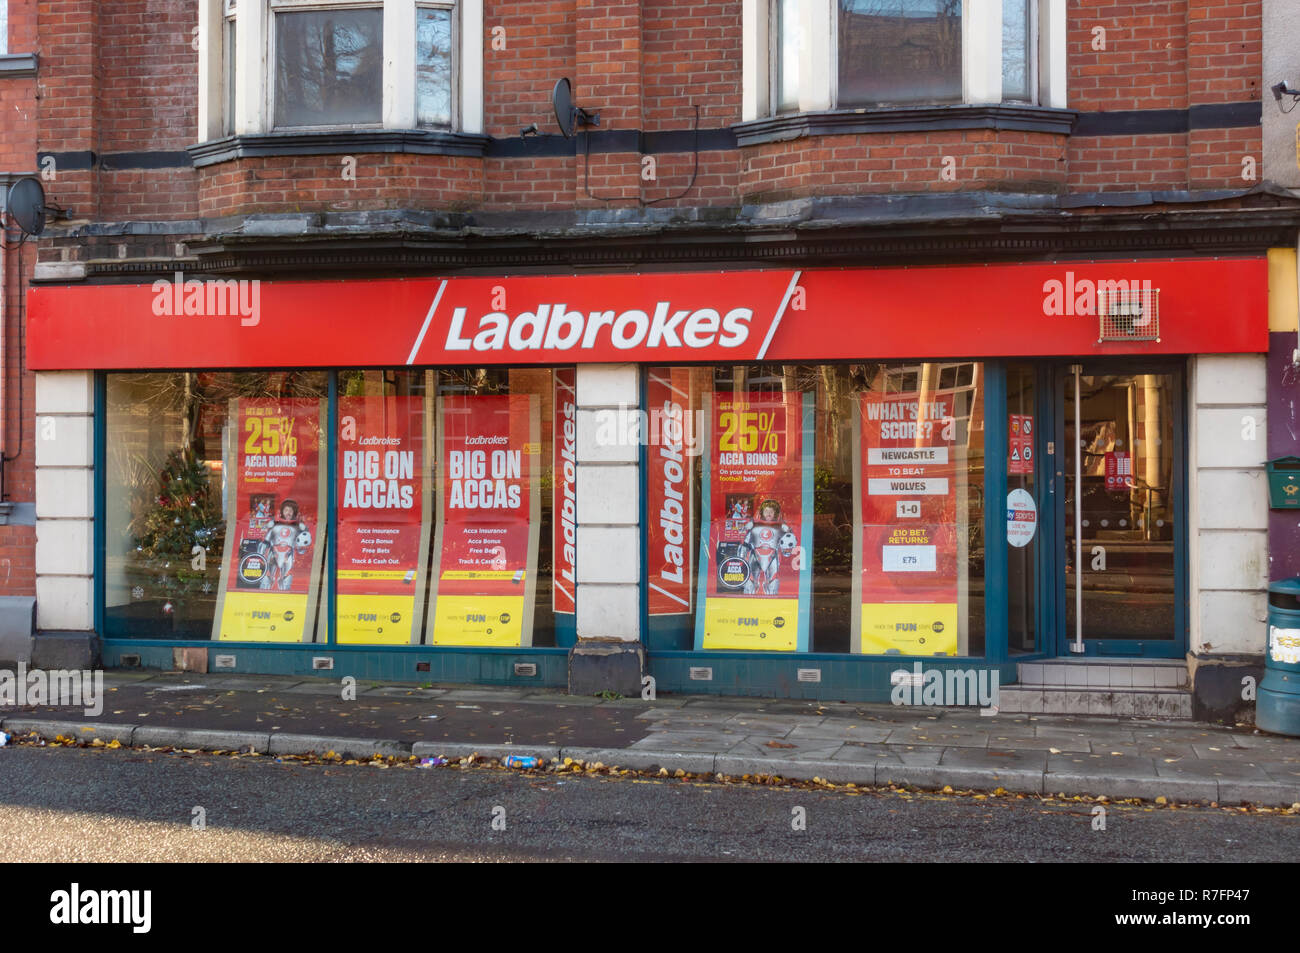 Ladbrokes betting shop à Radcliffe, Manchester. Banque D'Images